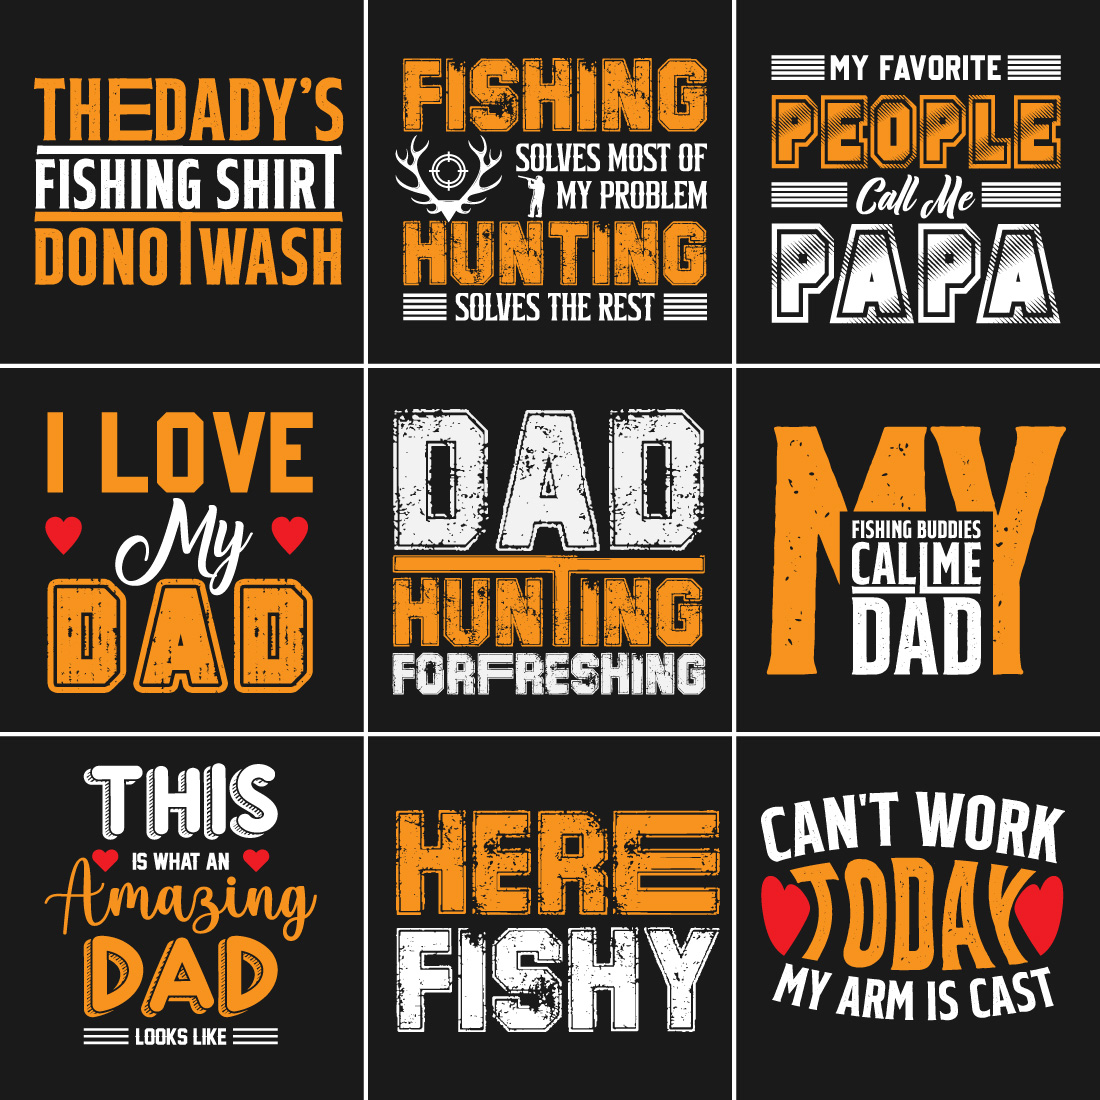 Modern Typography DAD T-shirt Design Bundles cover image.